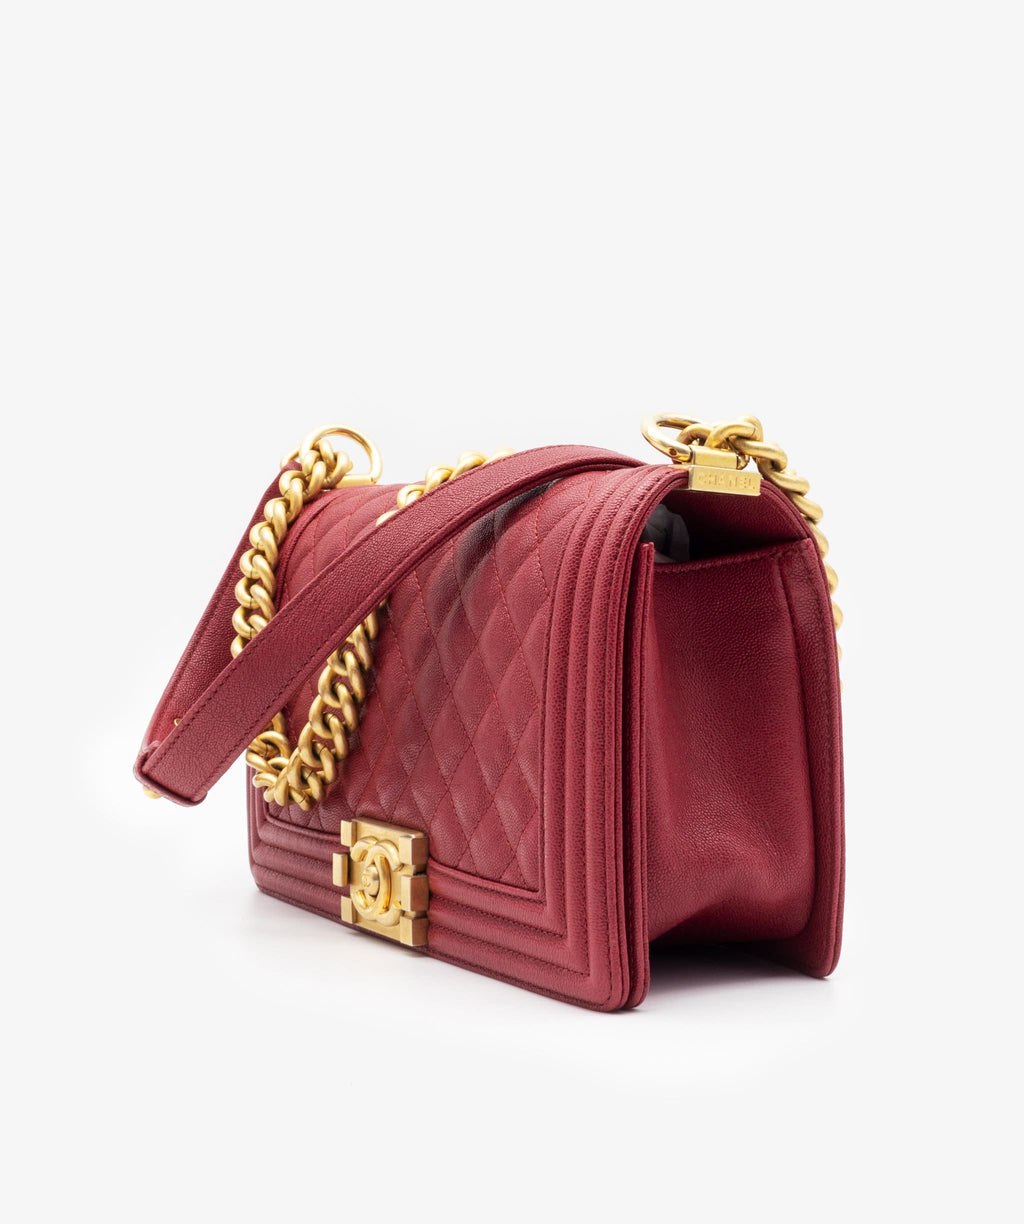 Chanel Boy Bag New Medium - 26 For Sale on 1stDibs